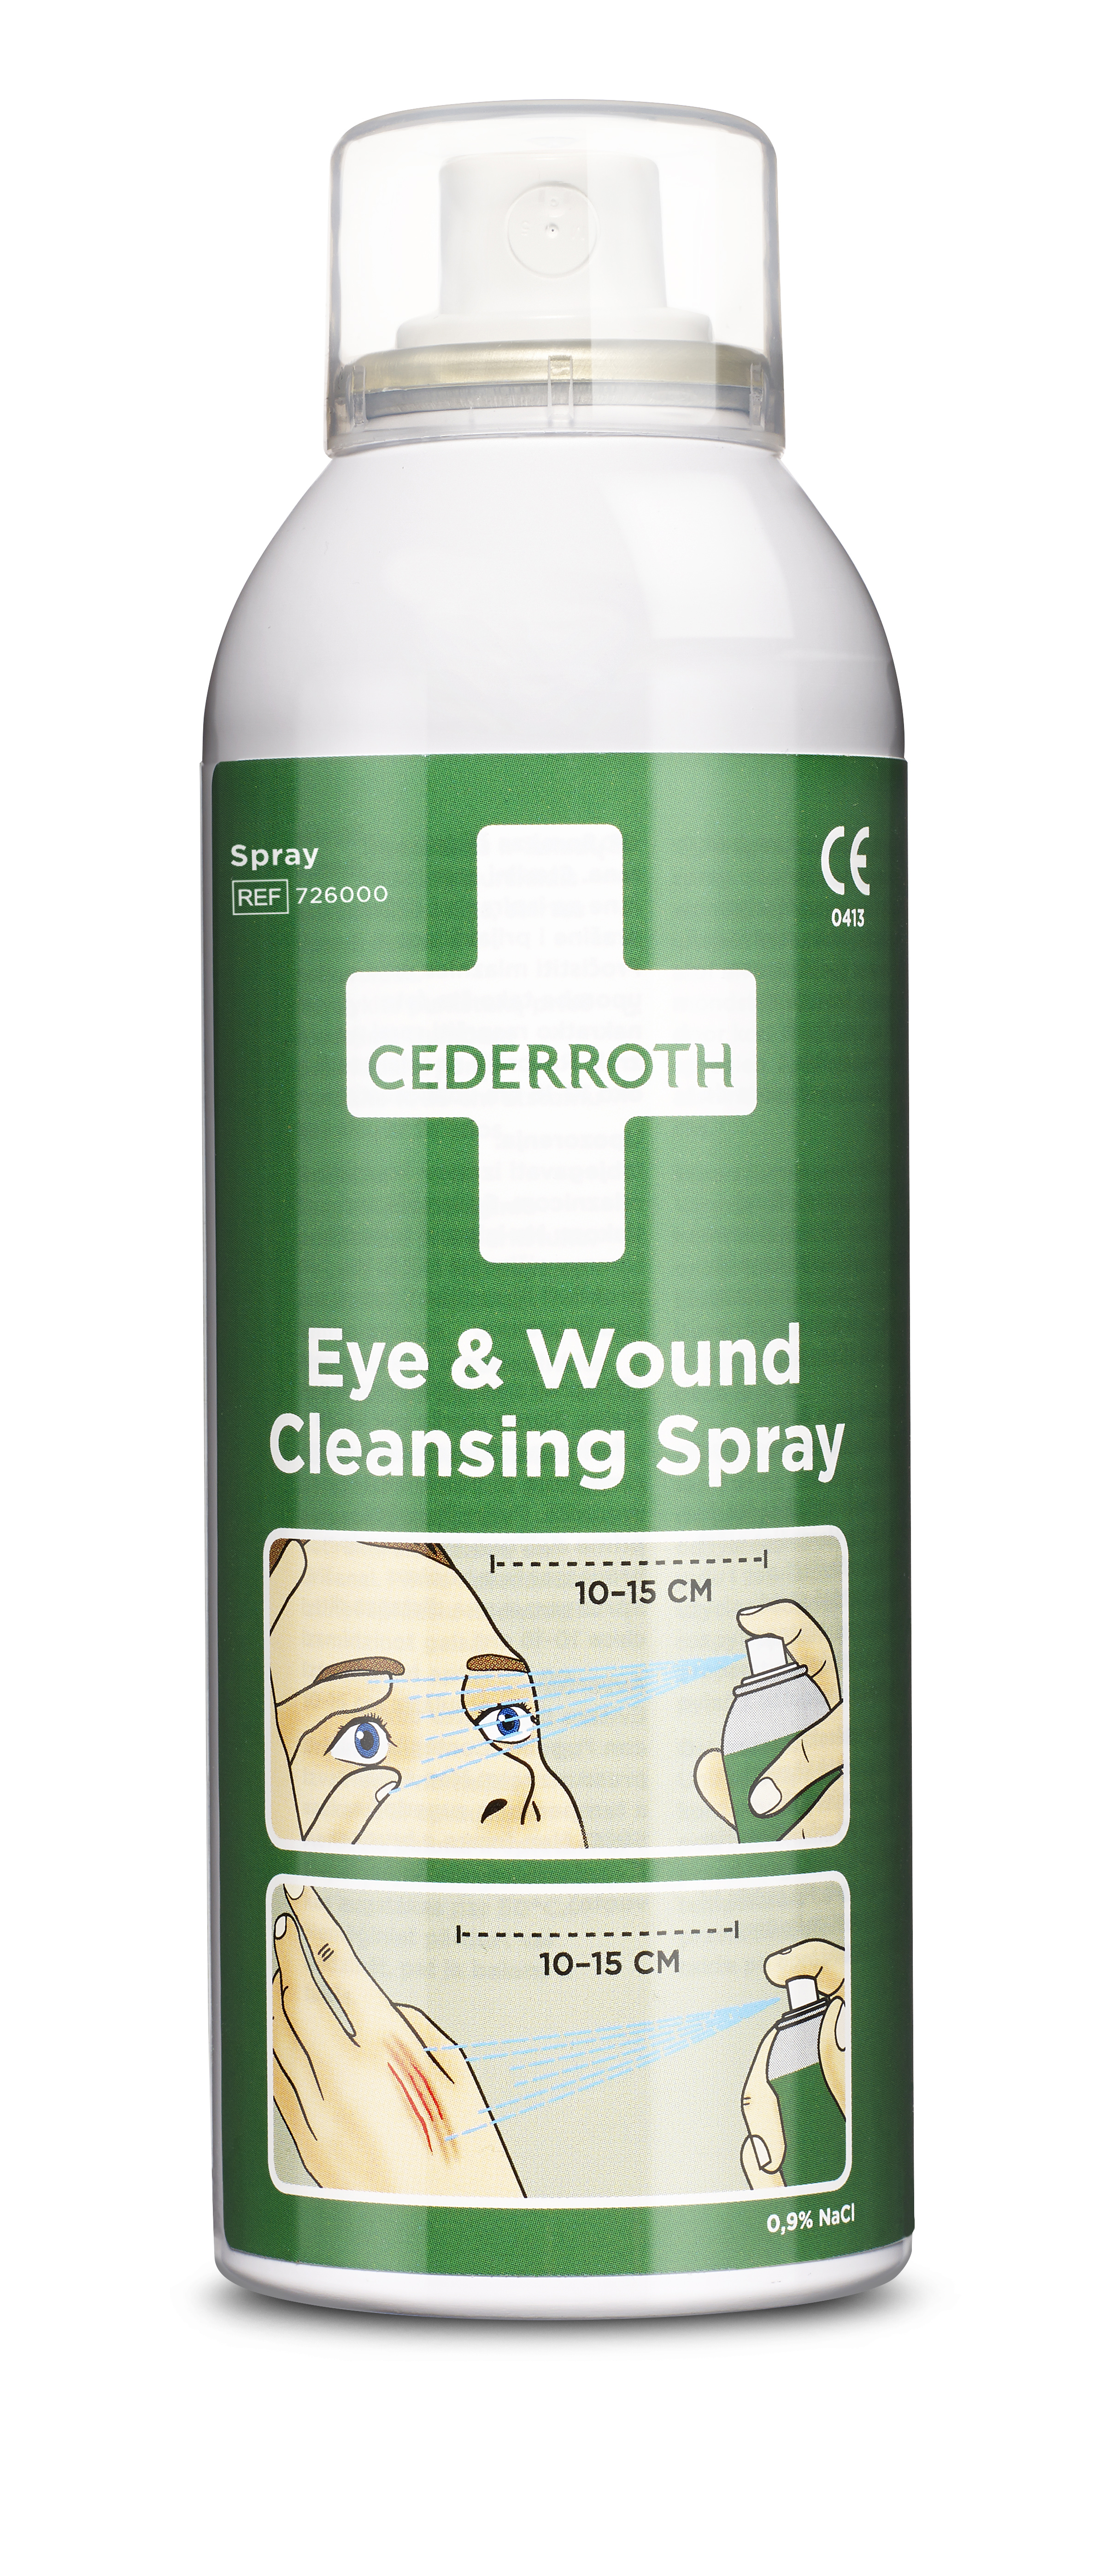 CEDERROTH Eye & Wound Cleansing Spray - 150 ml Dose